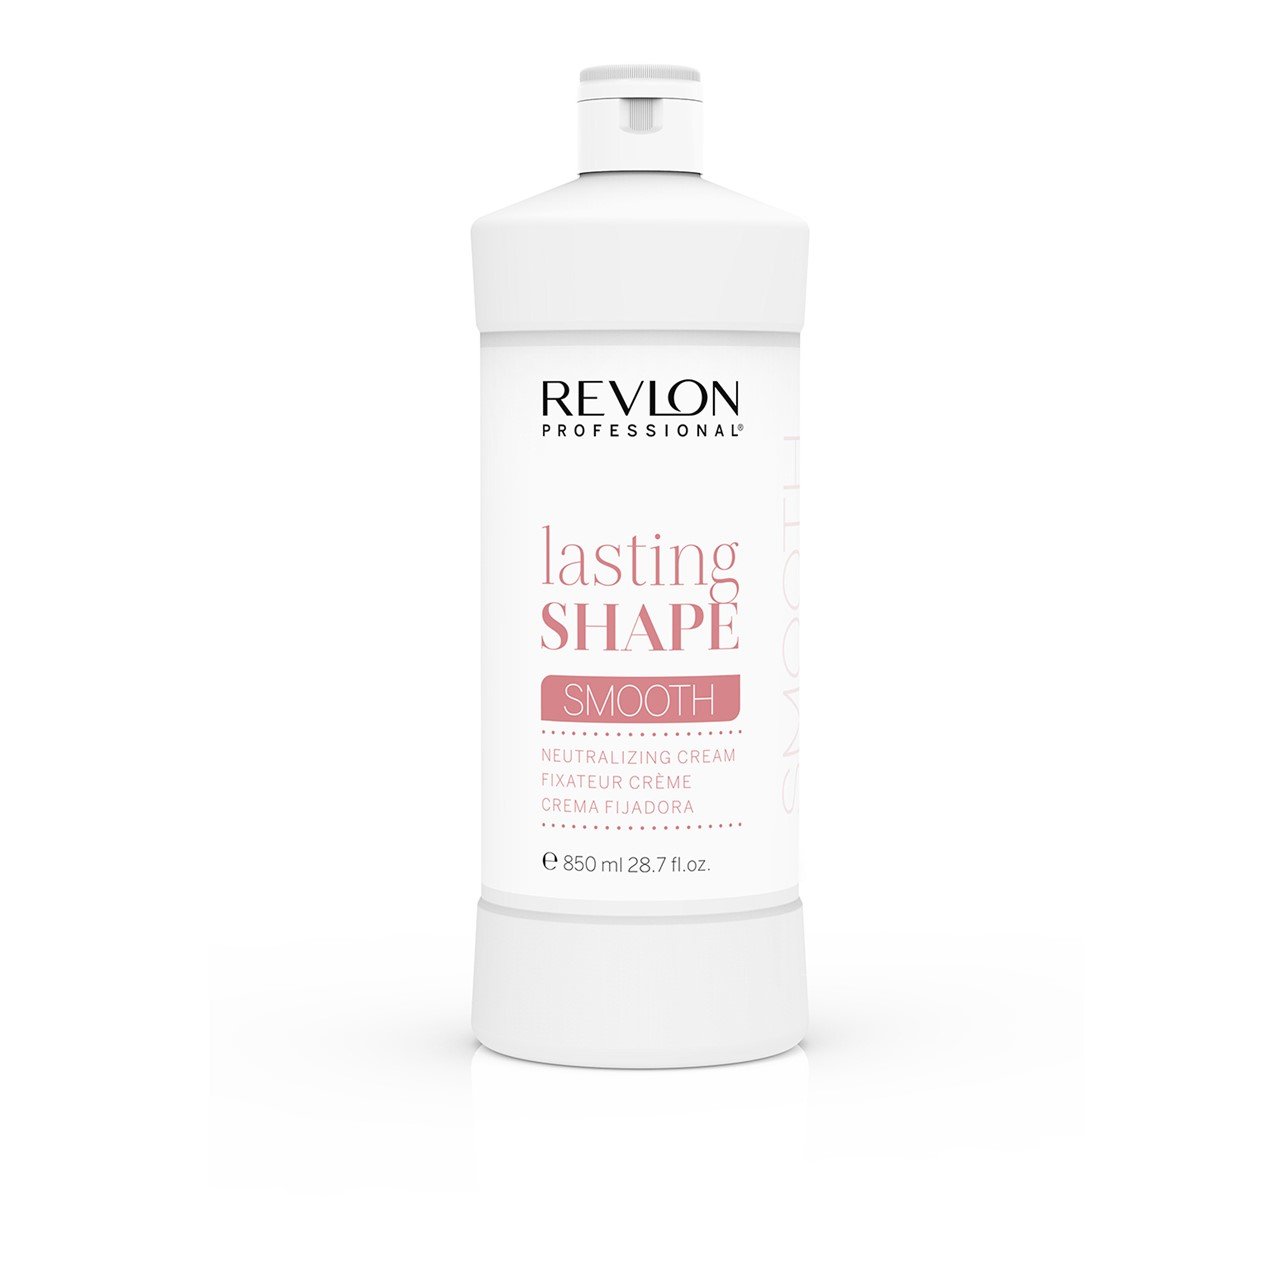 Revlon Professional Lasting Shape Smooth Neutralizing Cream 850ml